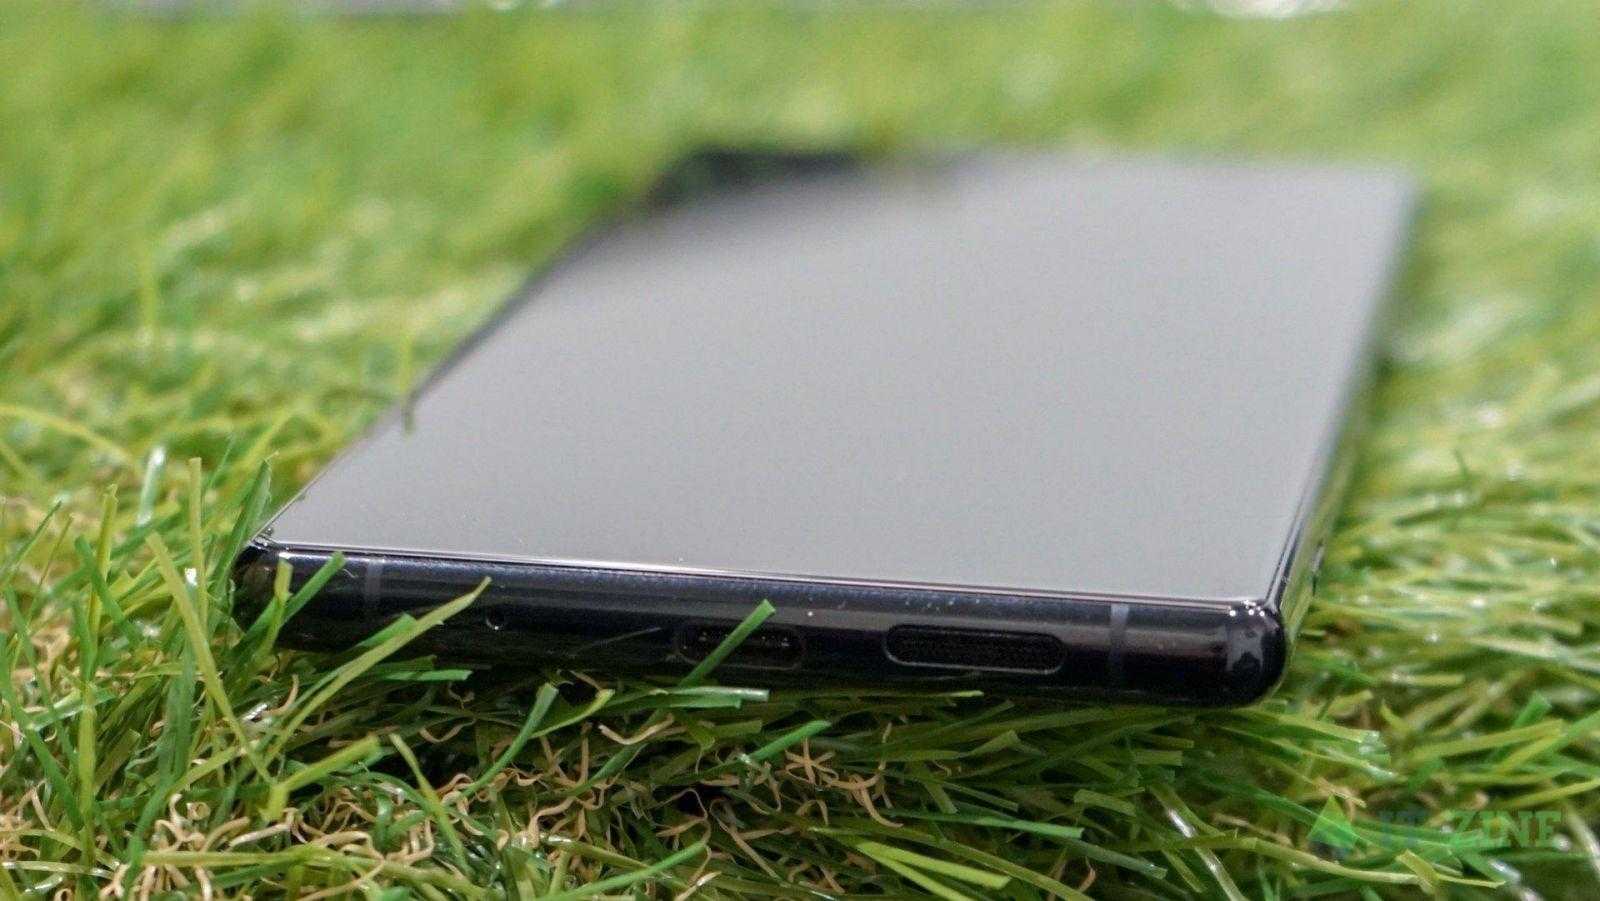 MWC 2019. Sony представила флагманский смартфон Xperia 1 c тройной камерой и 4K HDR OLED дисплеем (DSC05436)